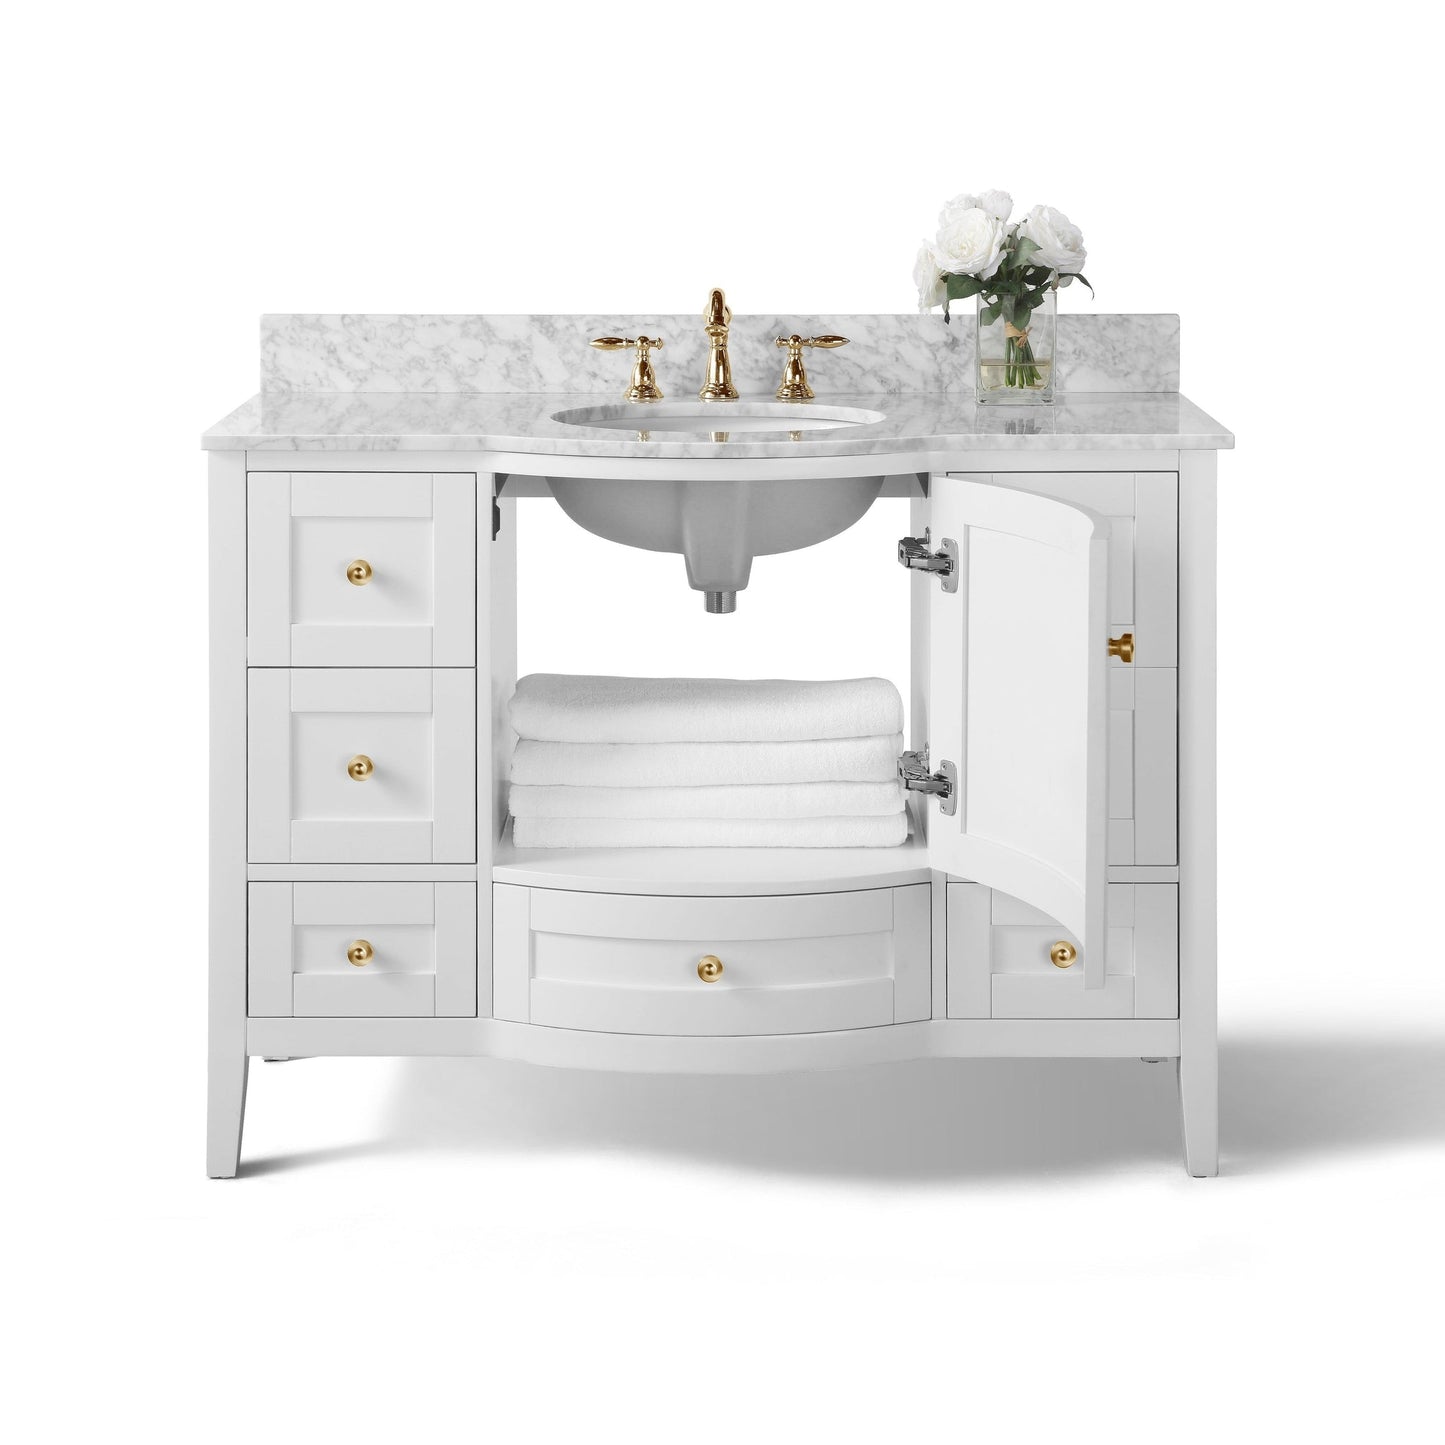 Ancerre Designs Lauren 48" White Single Door 7-Drawer Bathroom Vanity With Italian Carrara White Marble Vanity Top, Single Oval Undermount Ceramic Sink, 4" Solid Wood Backsplash and Gold Finish Hardware